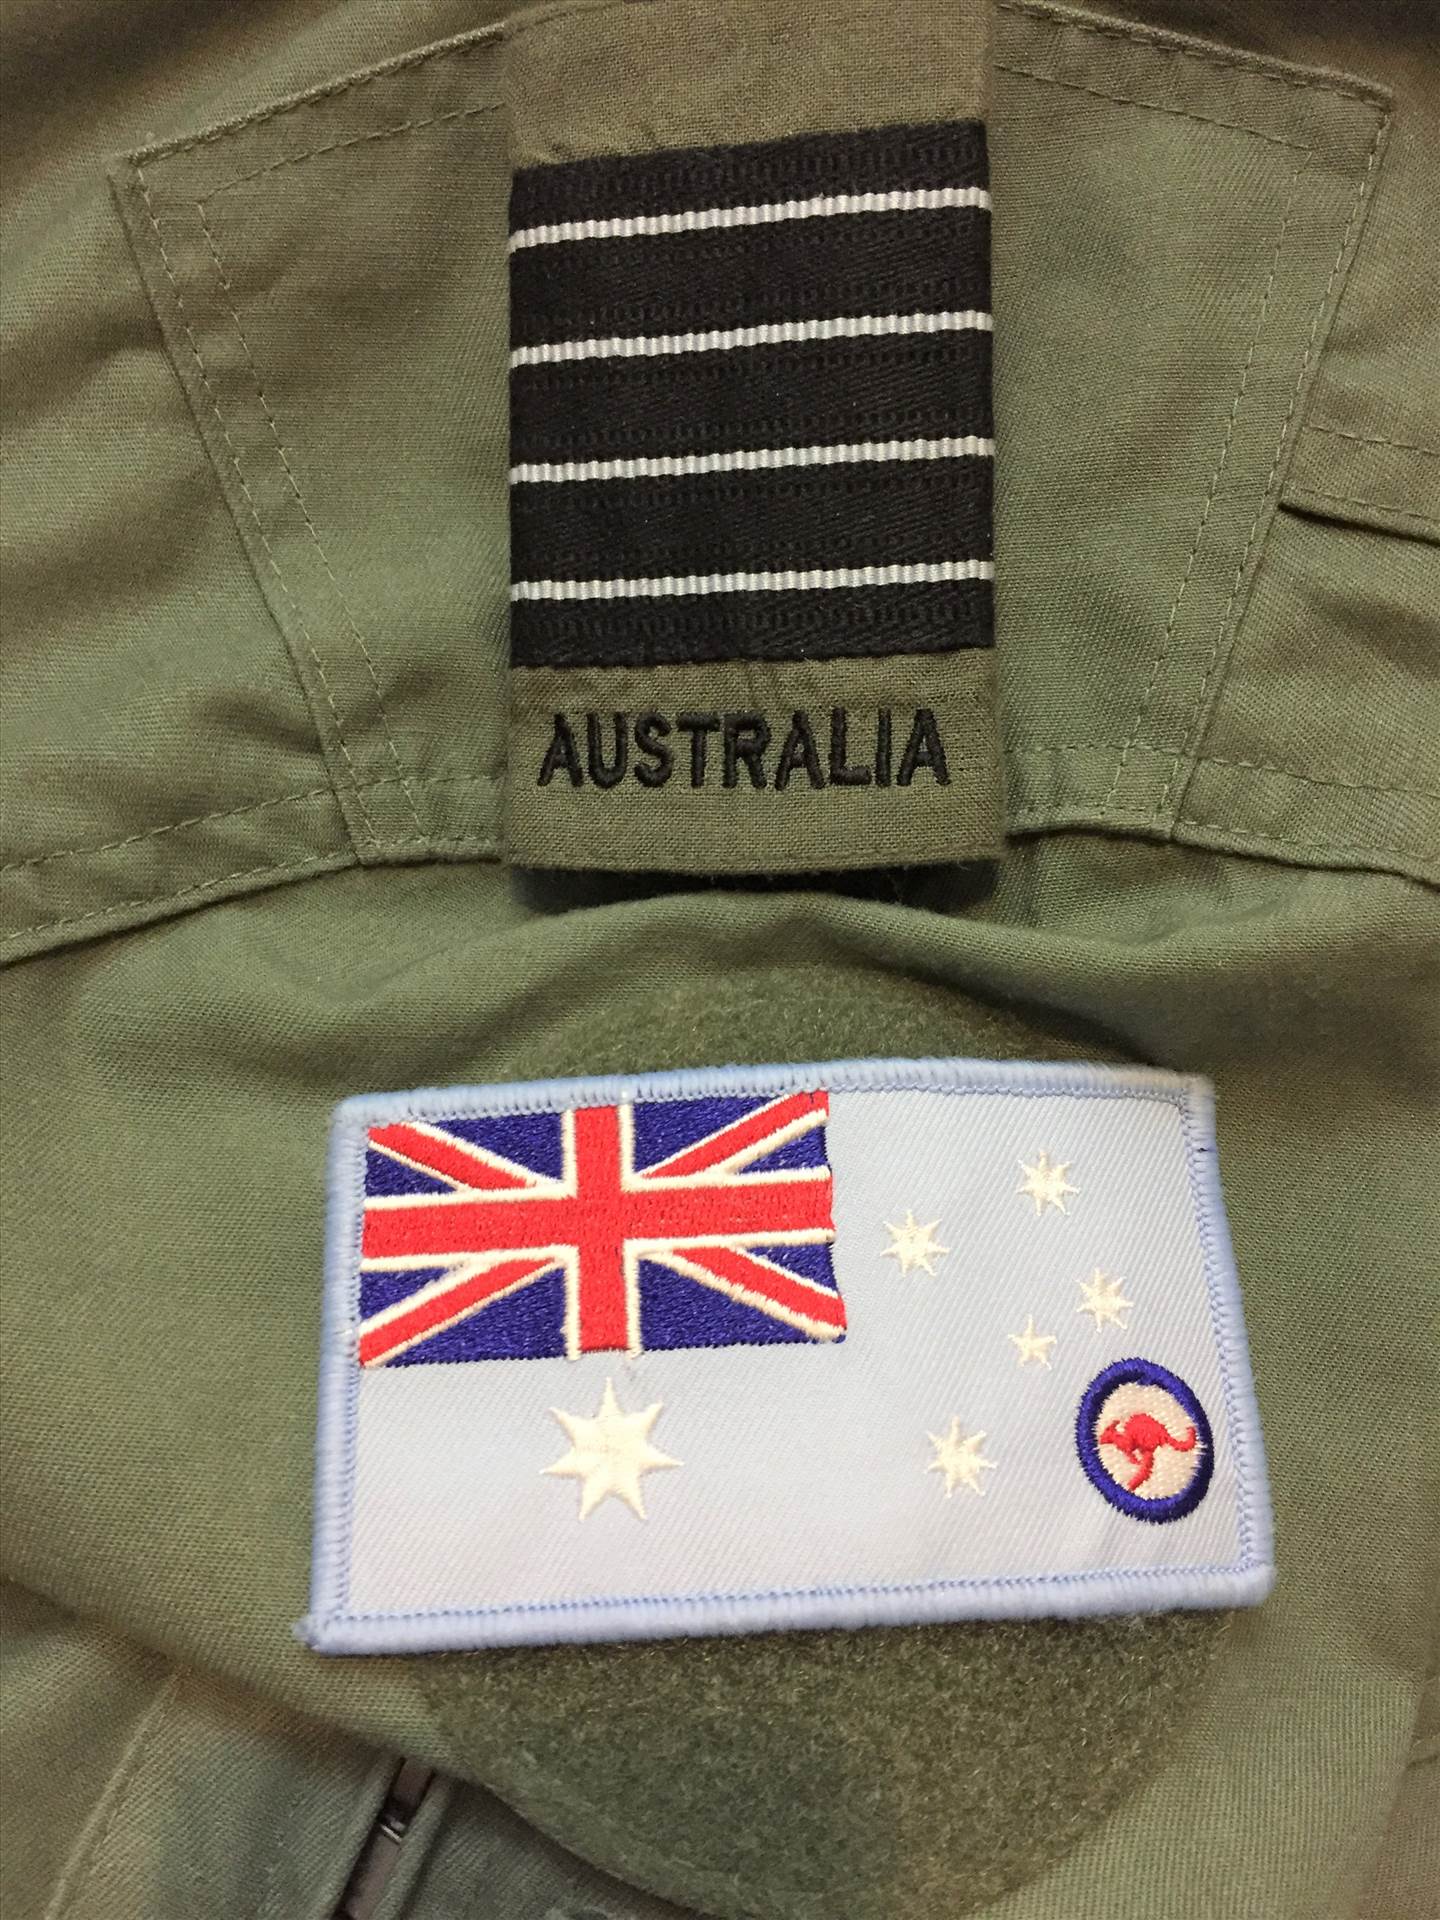  Royal Australian Air Force Ensign Patch – RAAF – Royal Australian Air Force Ensign by johntorcasio